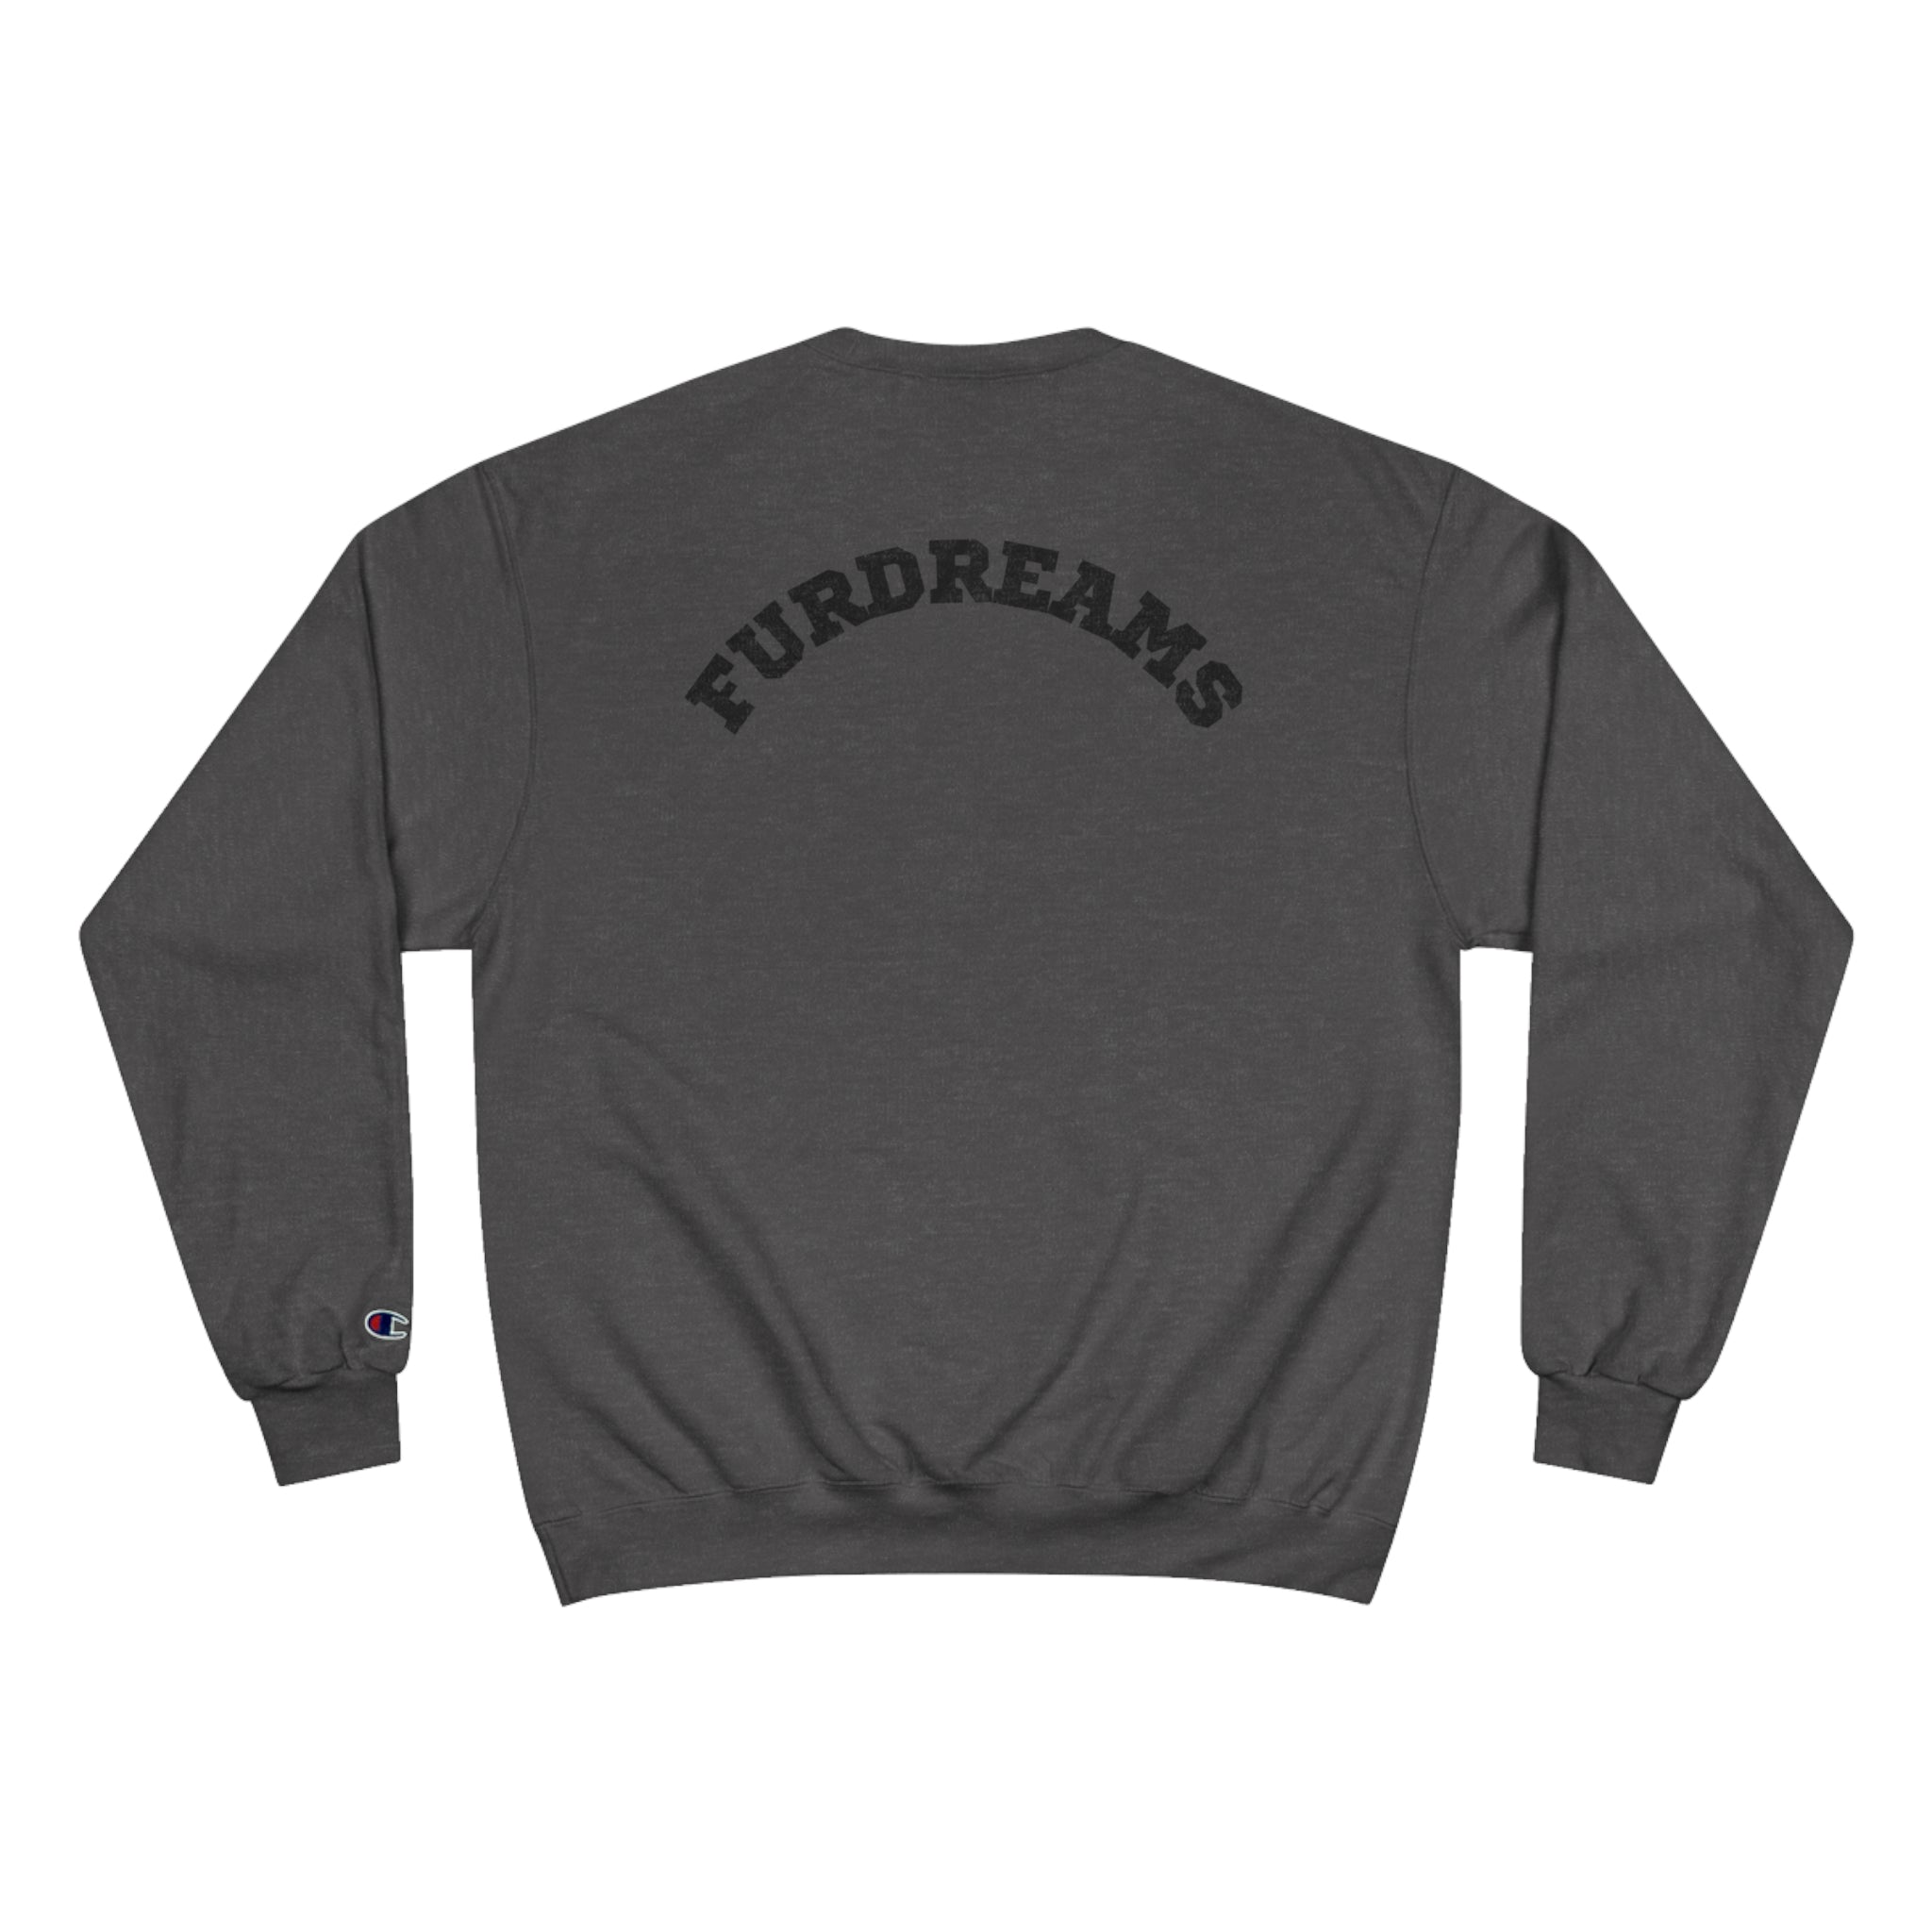 FURDreams ”NYC” XVII Champion Sweatshirt